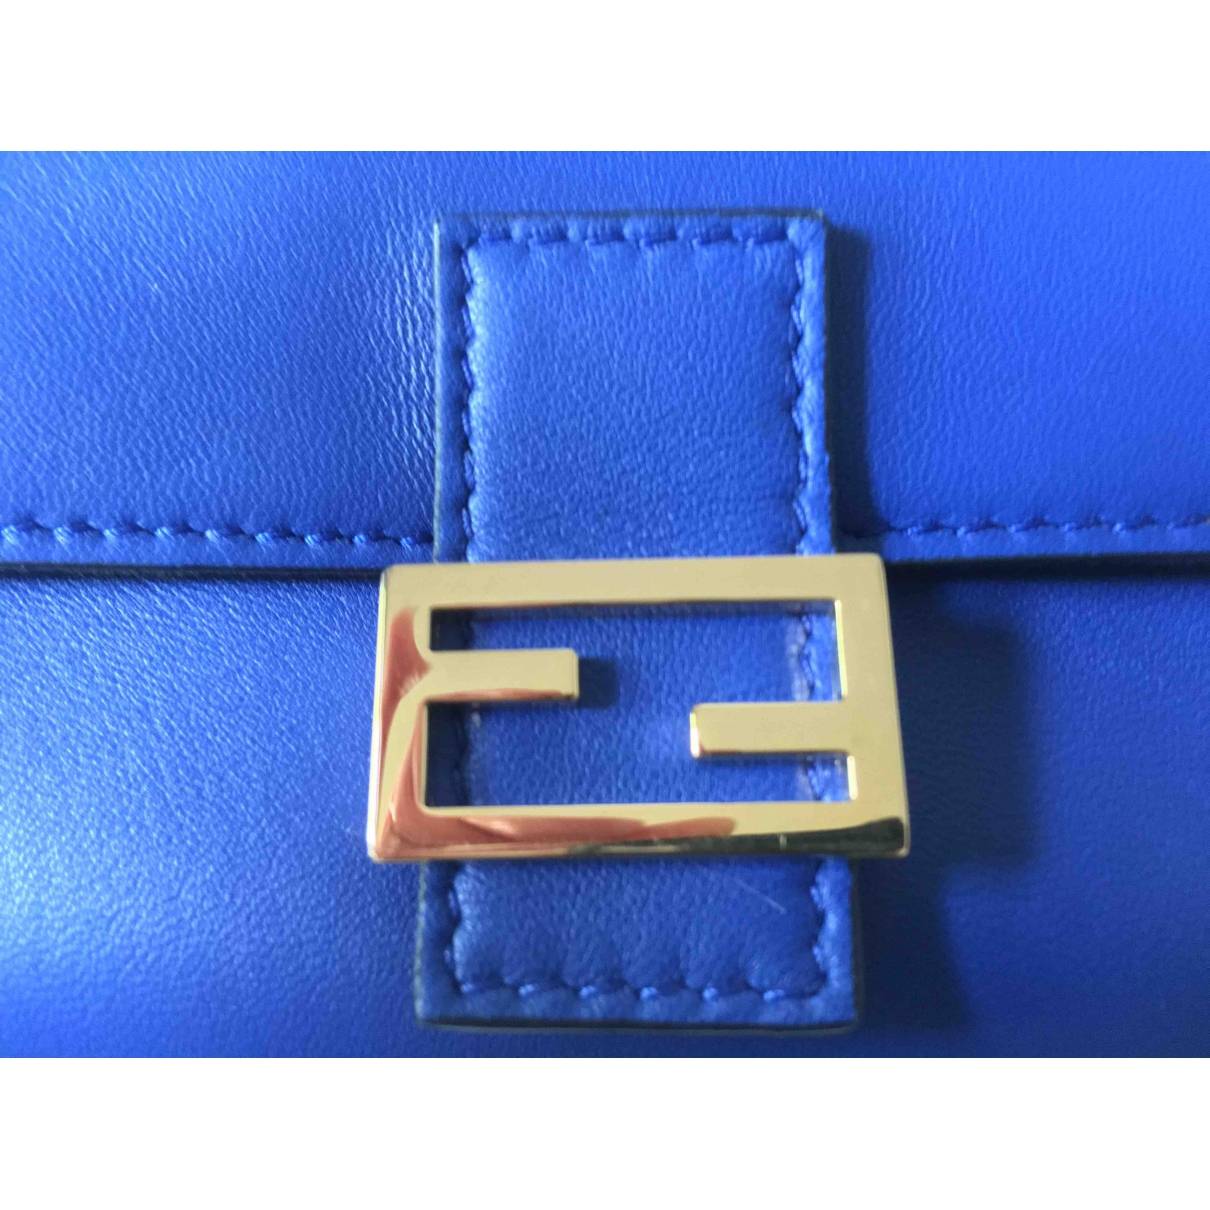 Baguette leather handbag Fendi